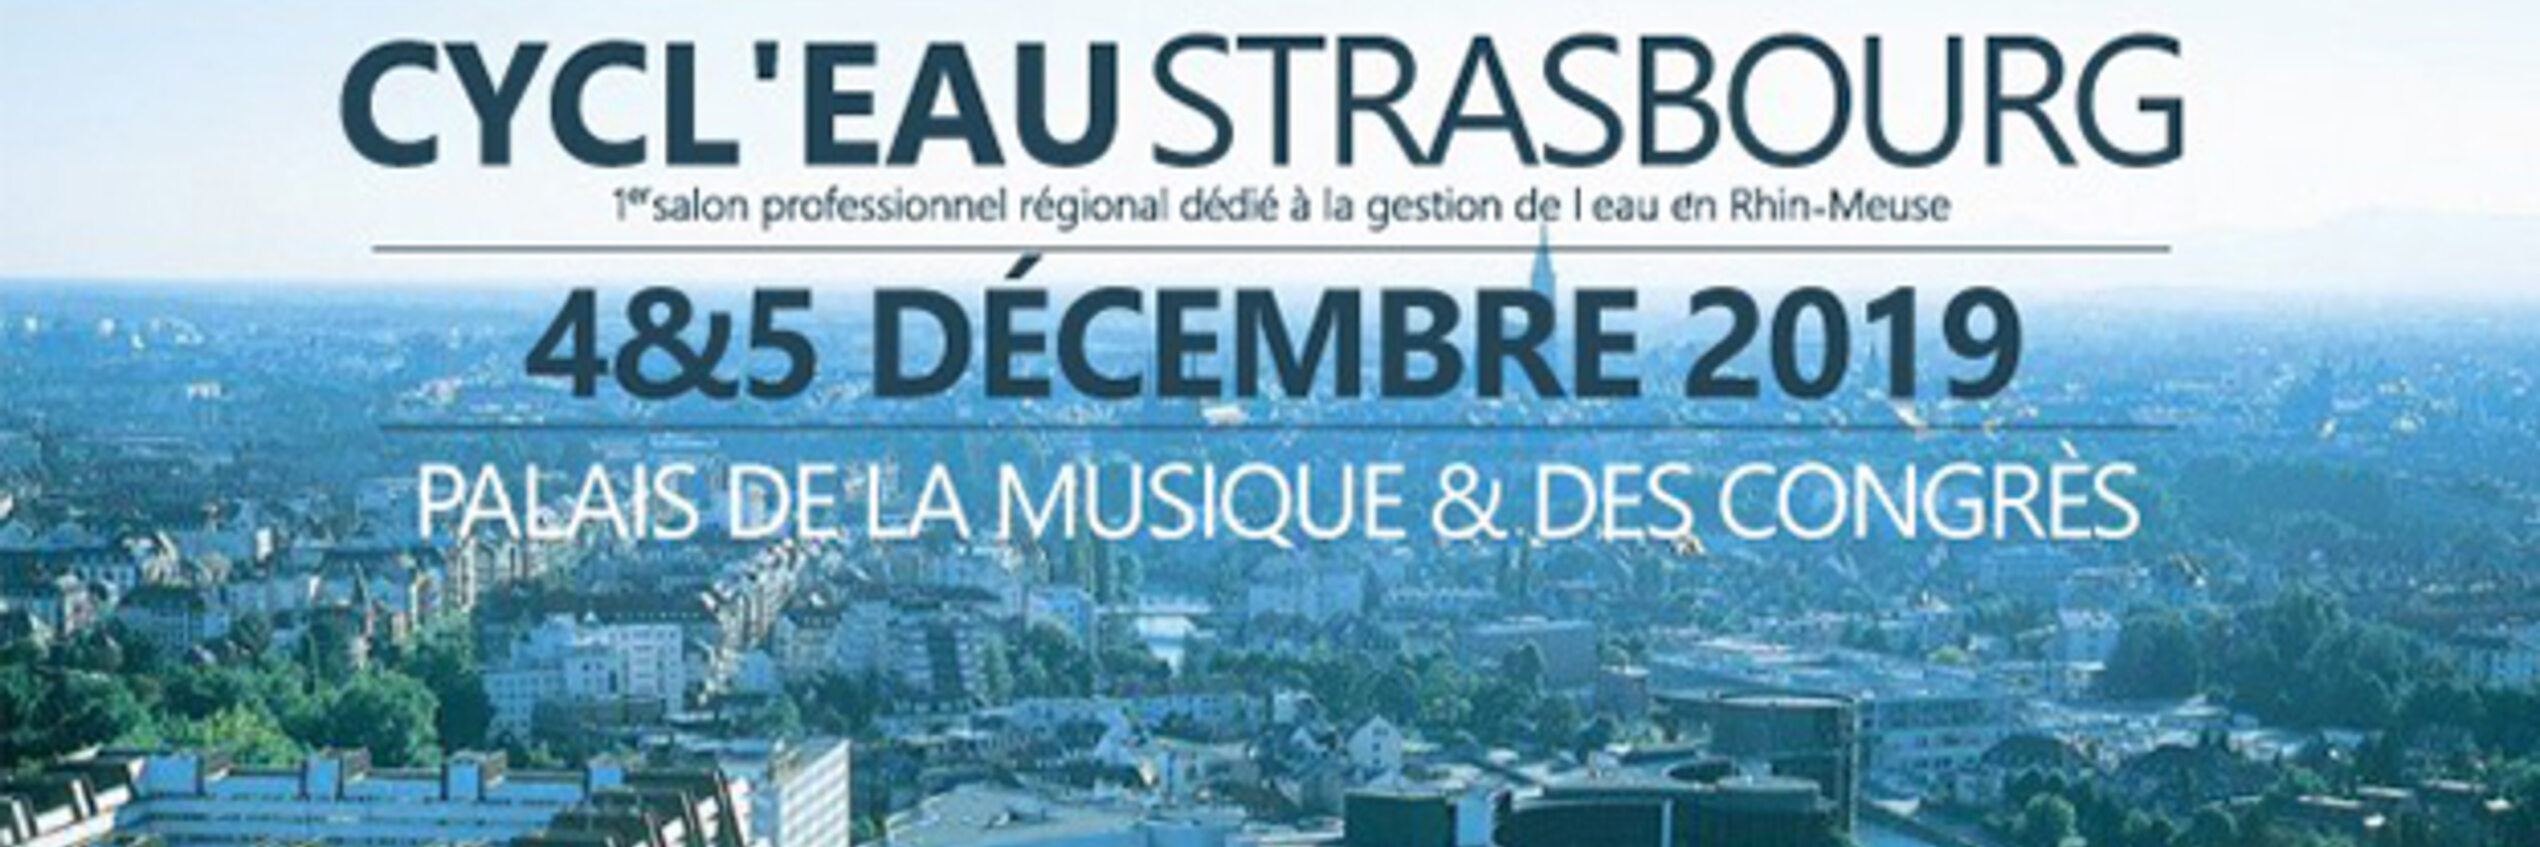 Cycl'Eau Estrasburgo, 4-5 de diciembre de 2019, Stand C9